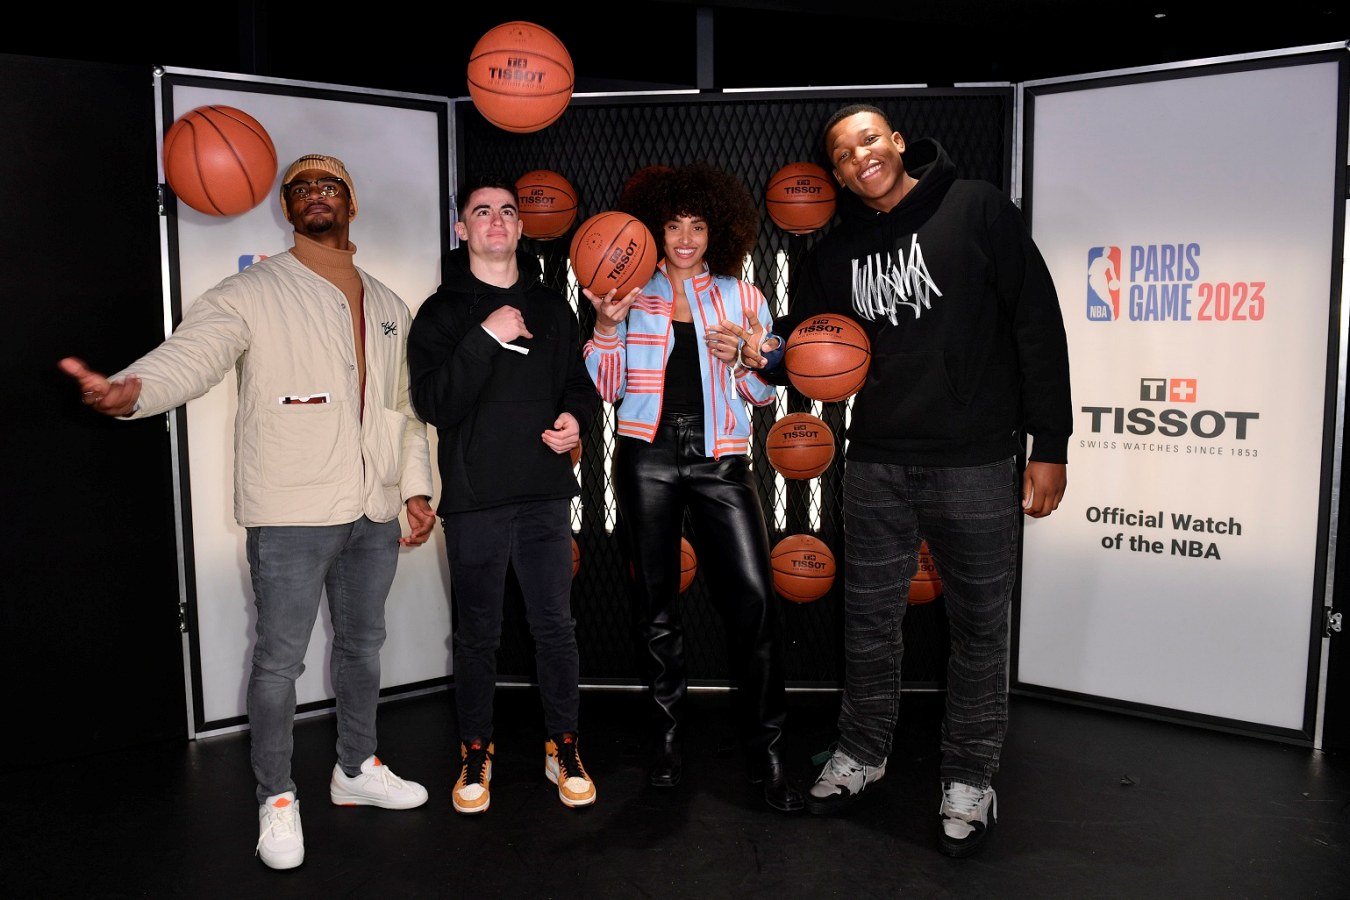 Tissot świętuje partnerstwo z NBA. Mecz NBA Paris Game 2023